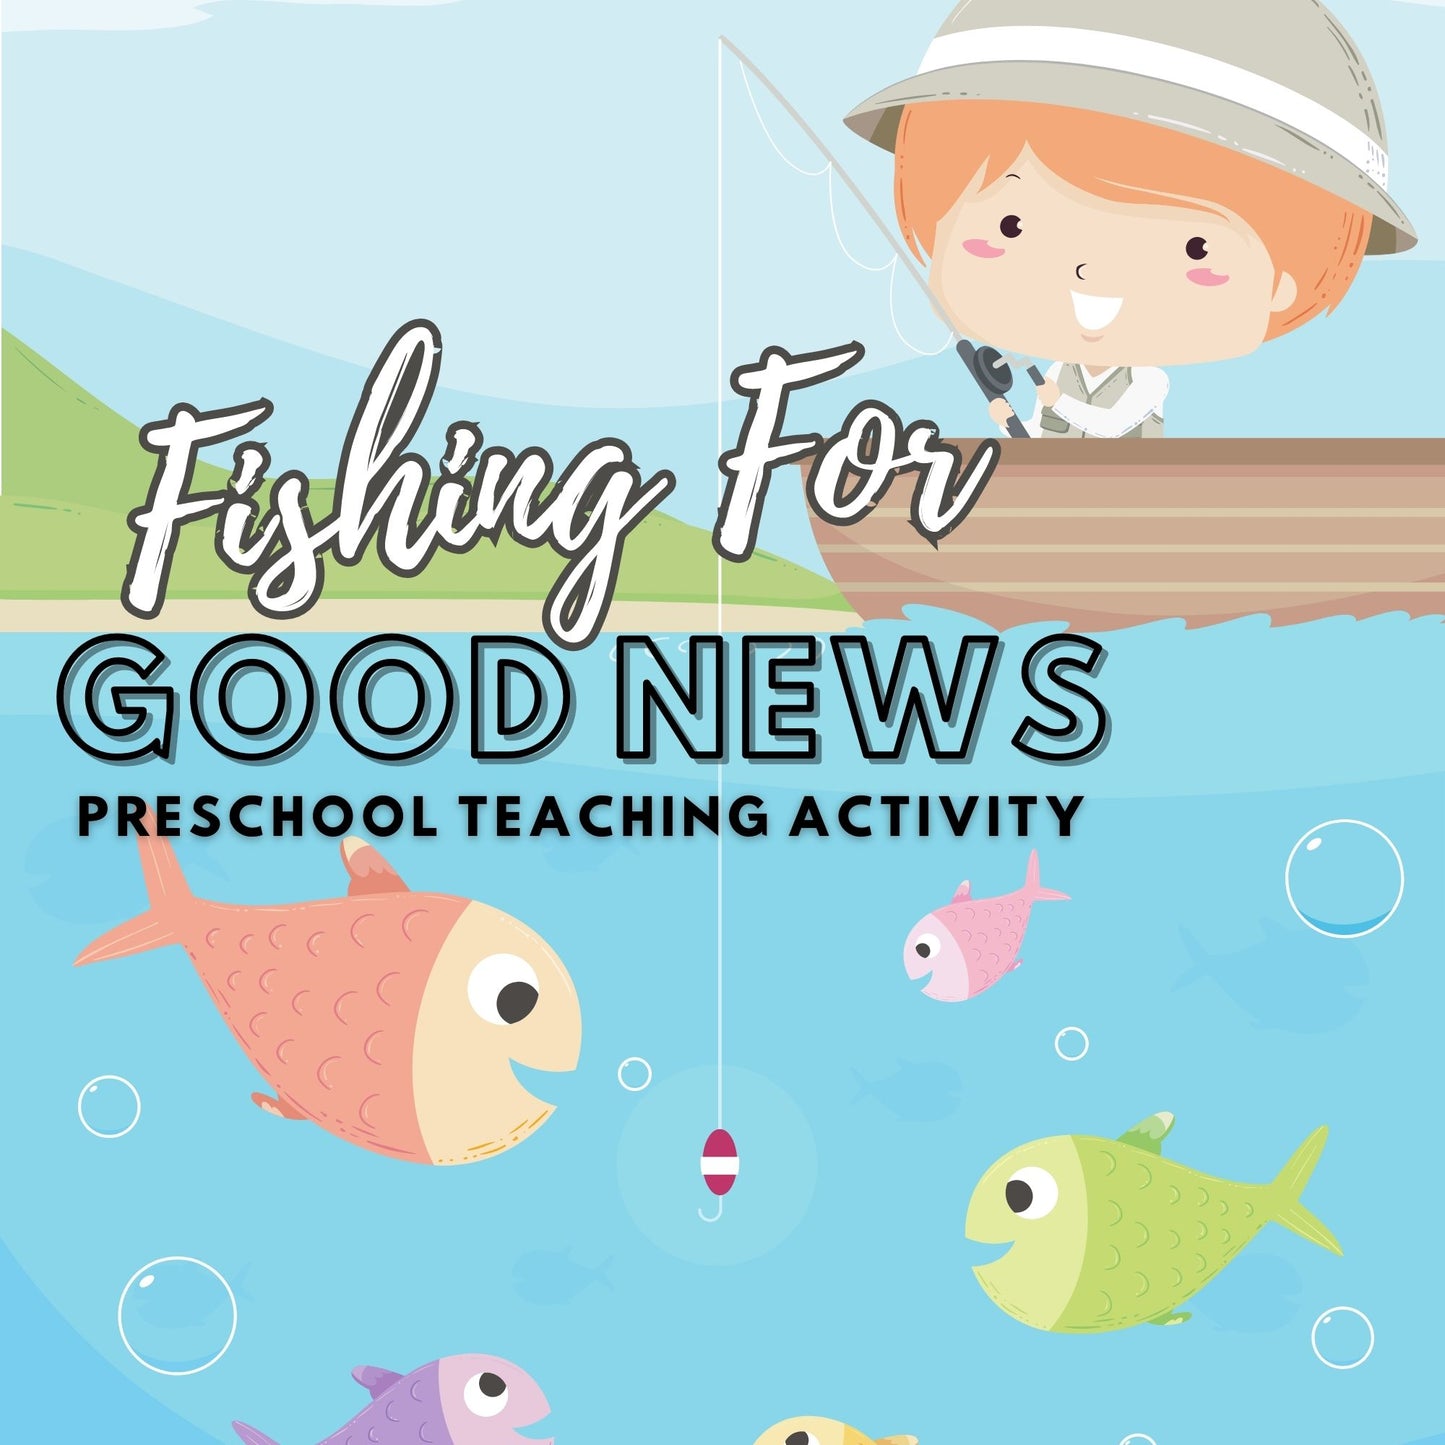 Fishing for Good News: Preschool Teaching Activity